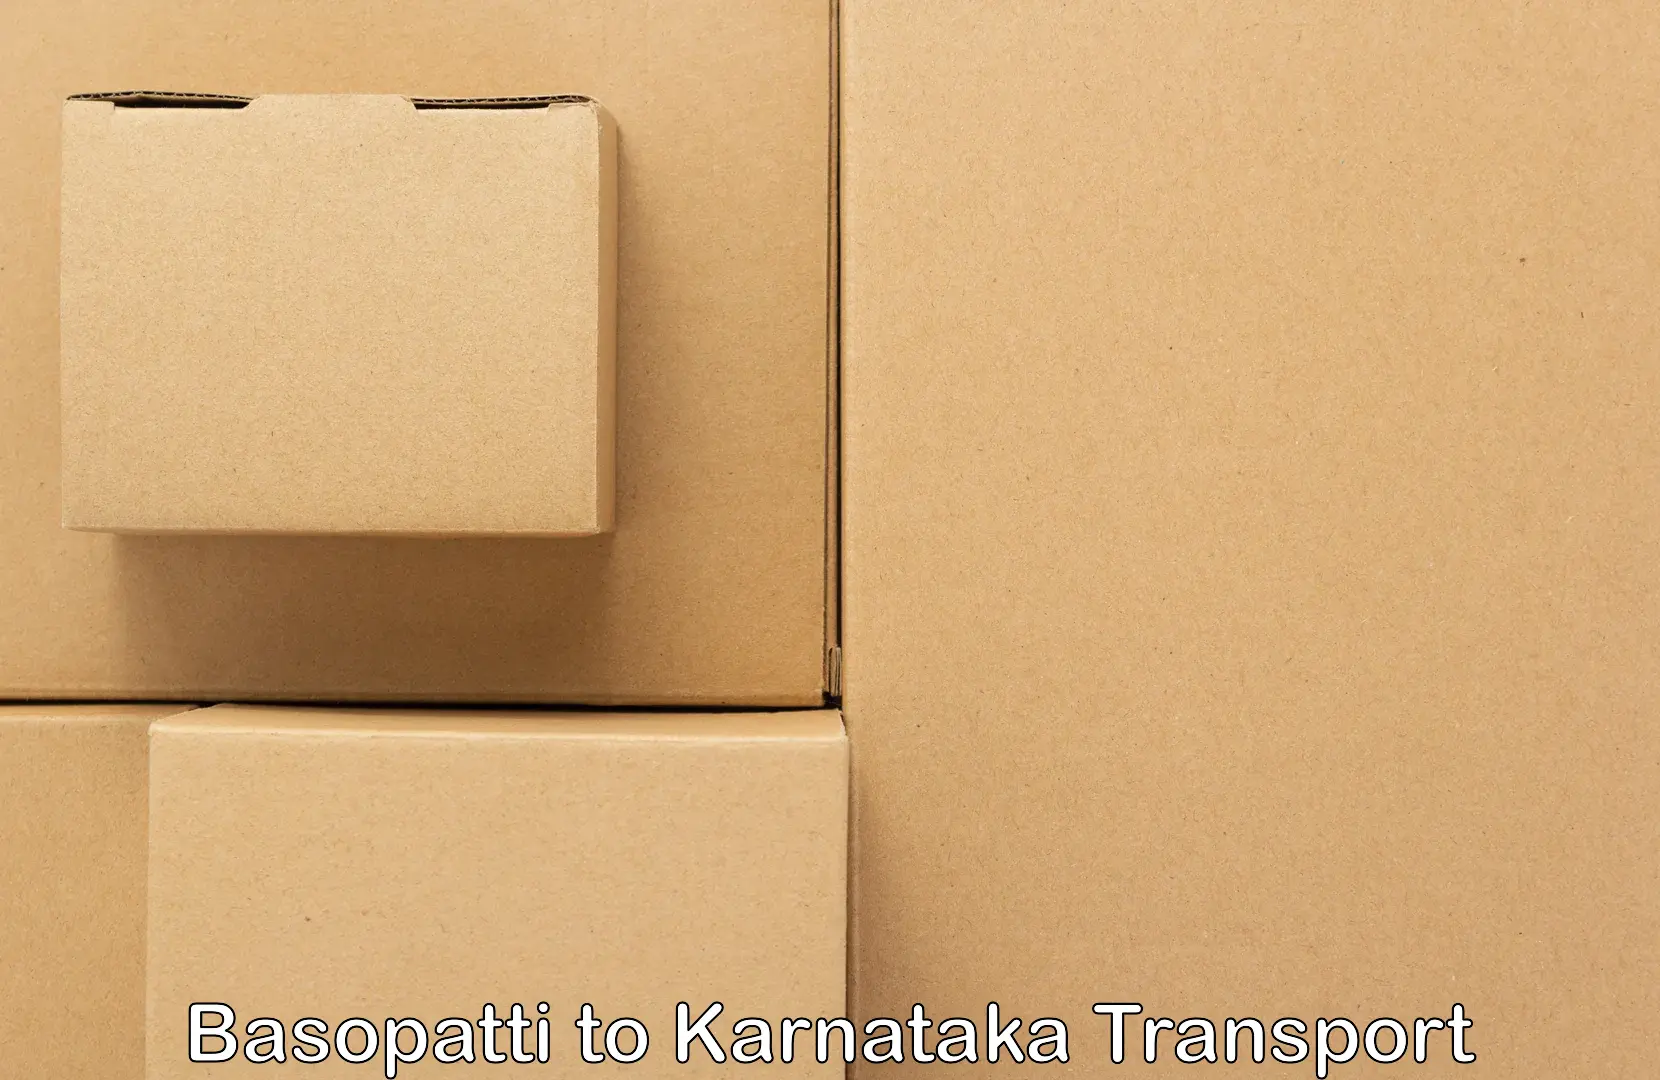 Truck transport companies in India Basopatti to Aland Kalaburagi